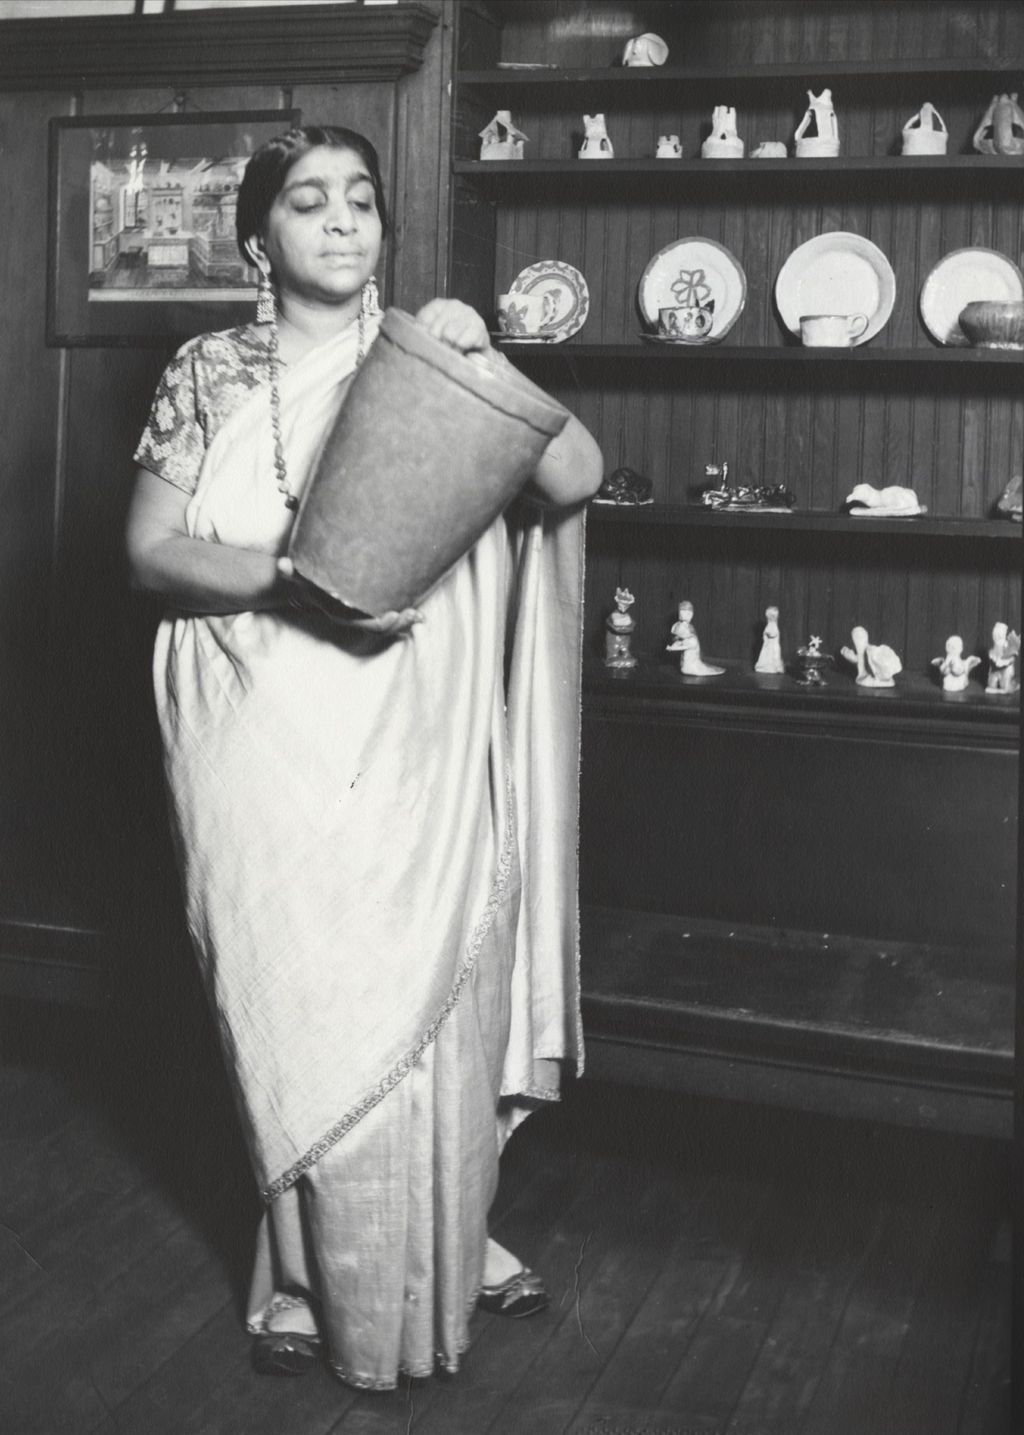 Miniature of Indian poet and independence leader Sarojini Naidu holding a large ceramic jar at Hull-House